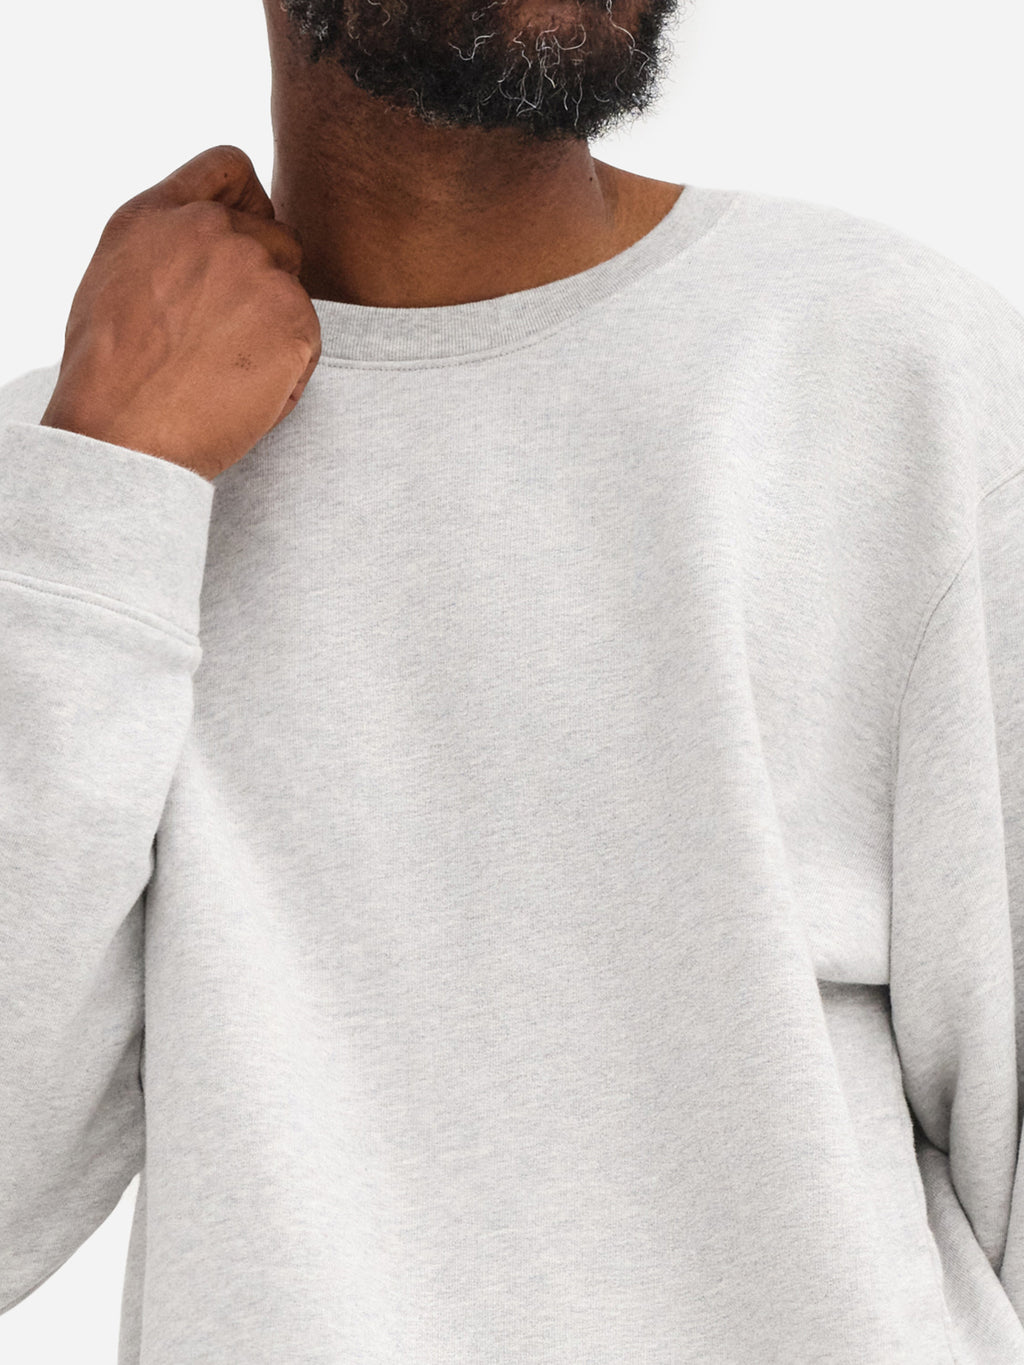 Men's Sweatshirts & Sweatpants – MATE the Label